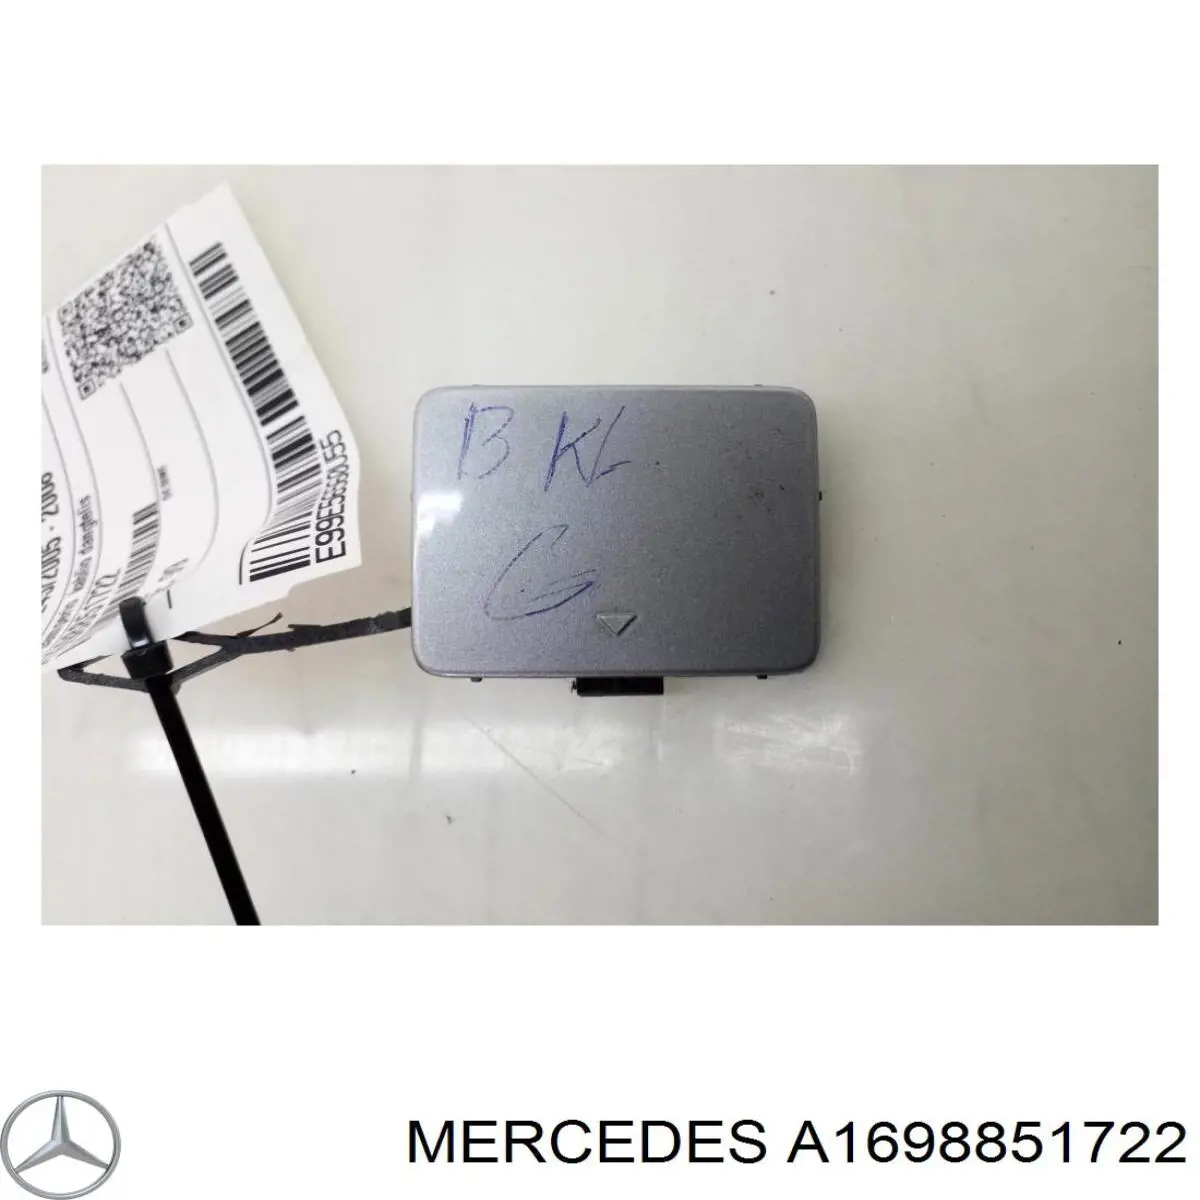 A1698851722 Mercedes